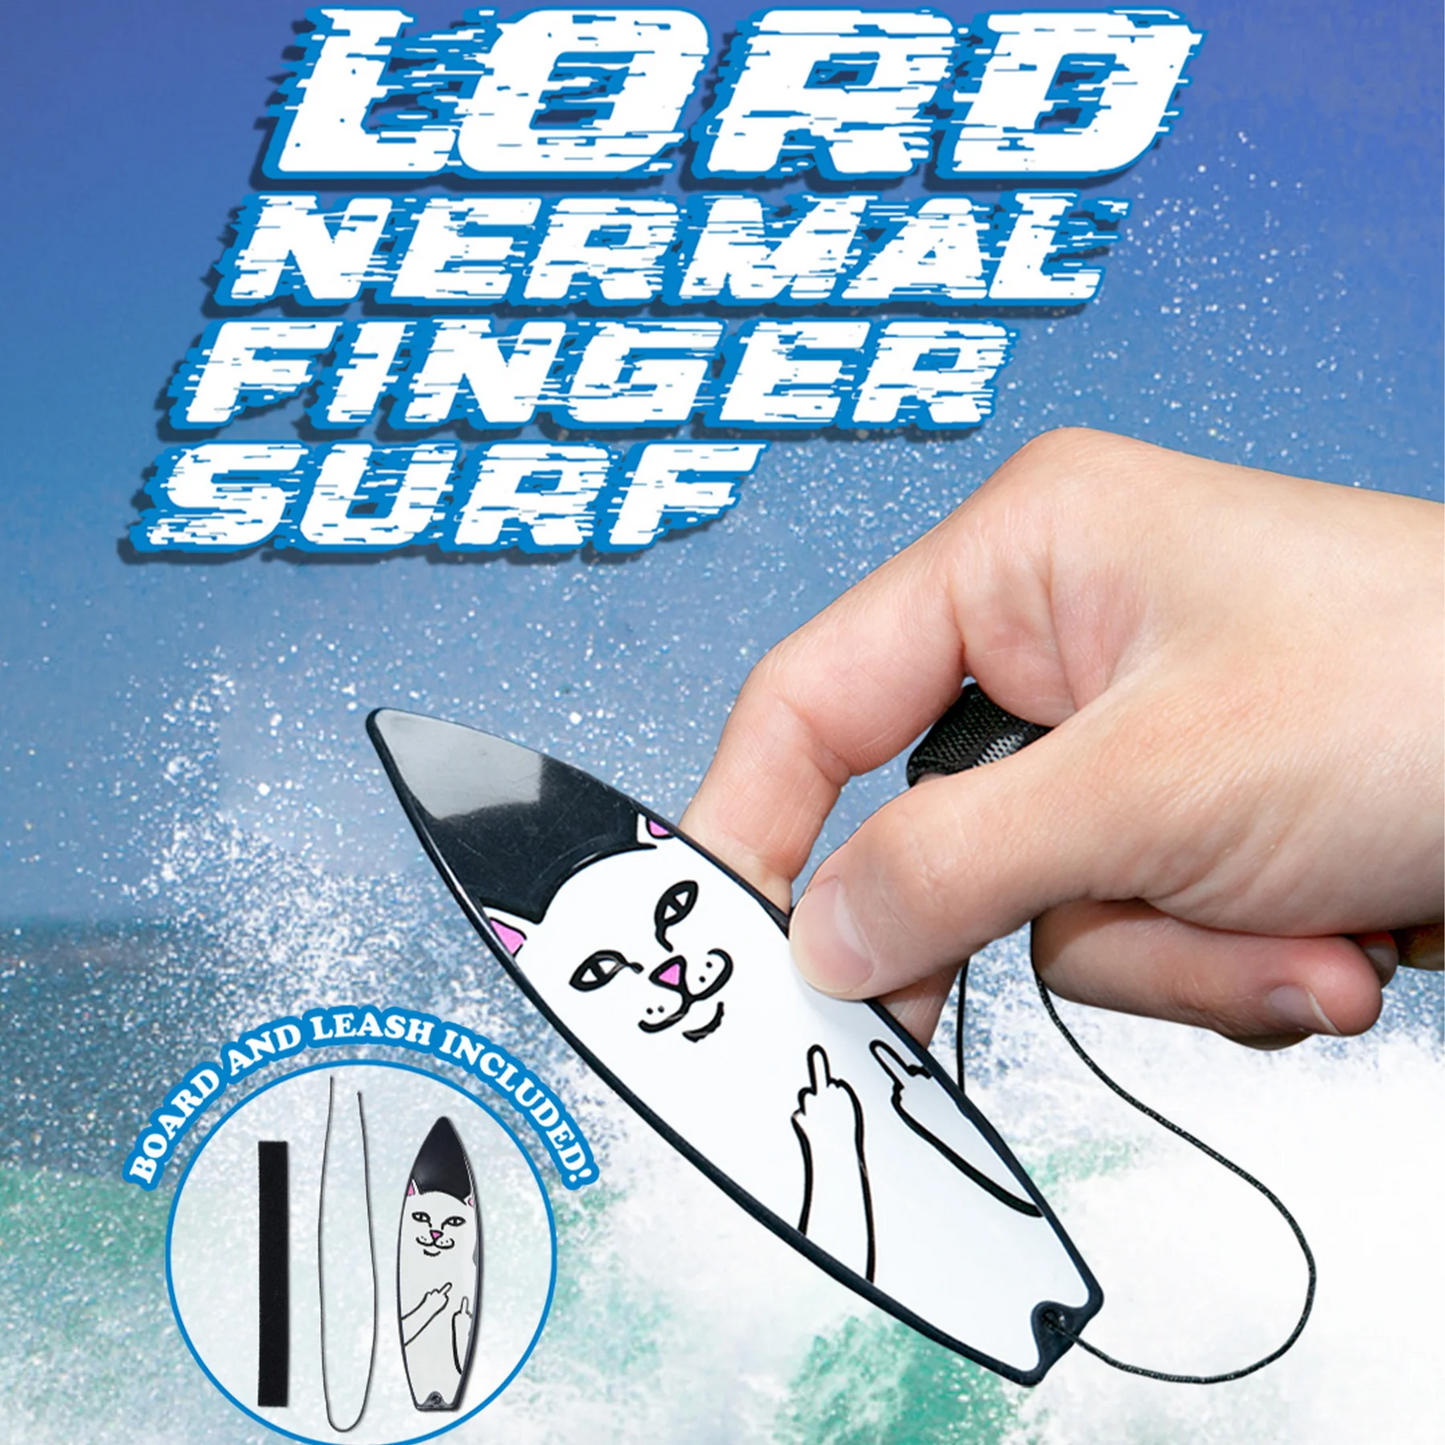 RIPNDIP LORD NERMAL FINGER SURFBOARD (BLACK)